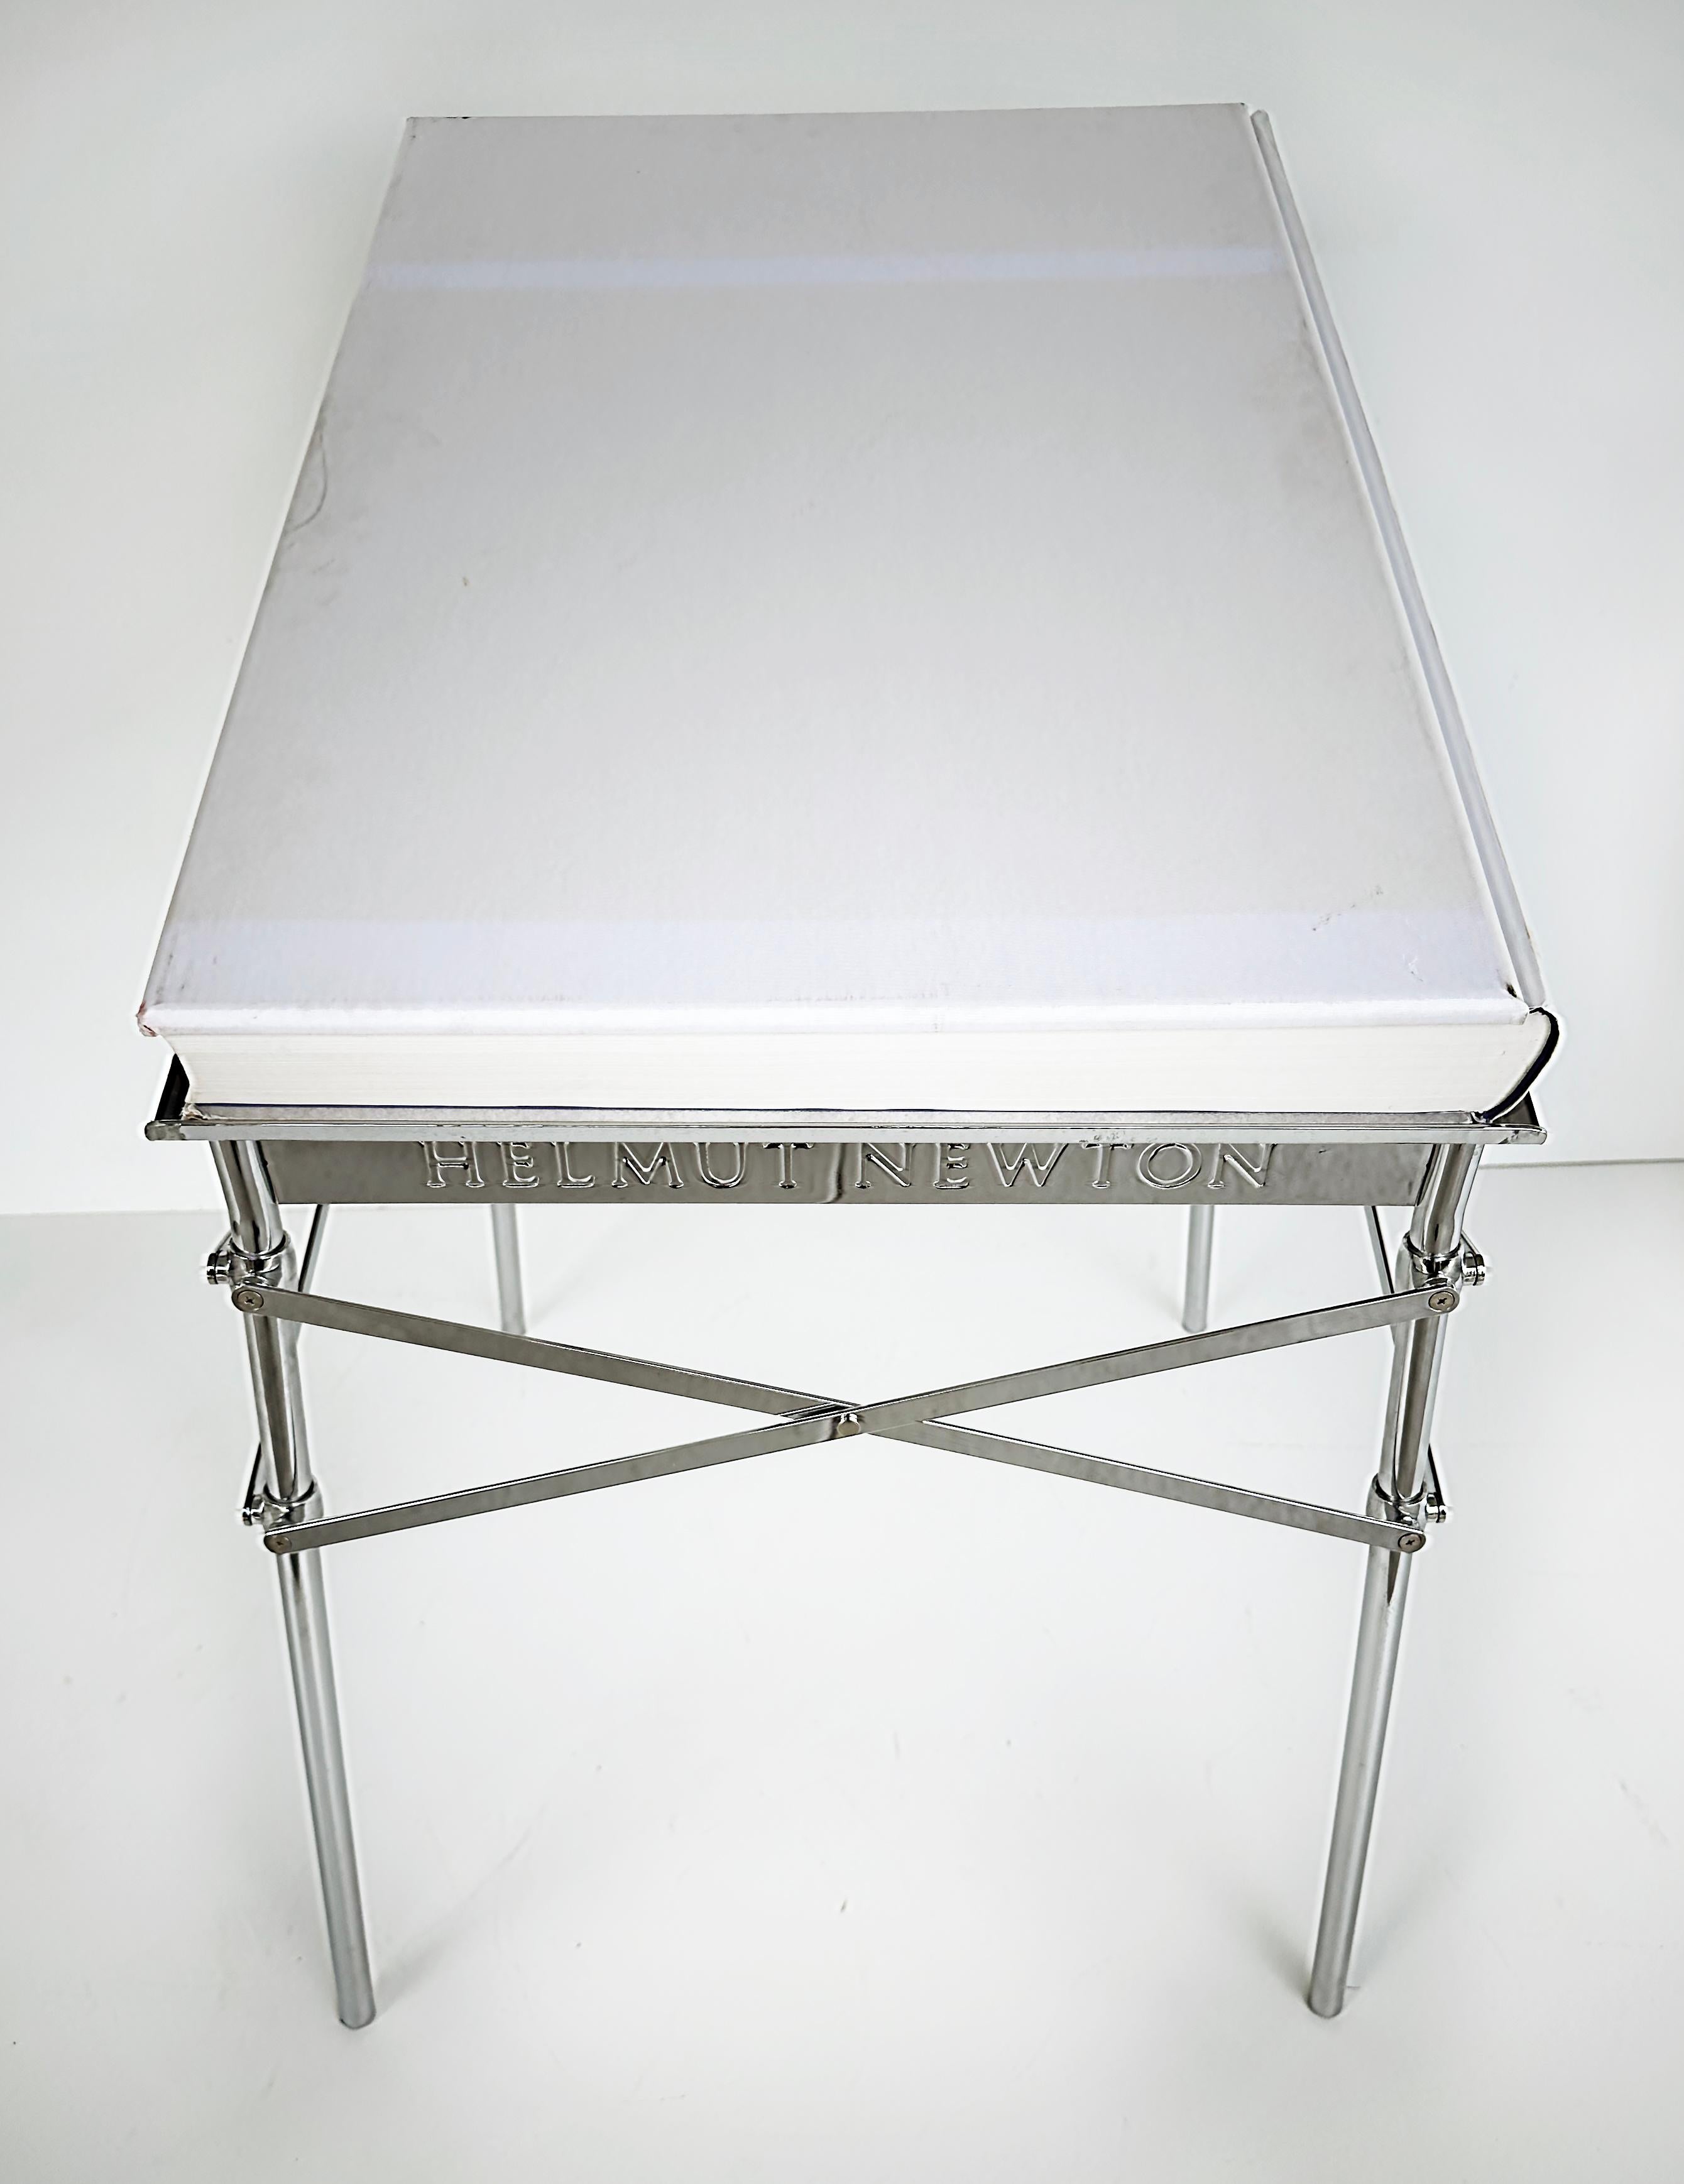 Helmut Newton Sumo Taschen Book, Philippe Starck Stand, Signed Limited Edition en vente 11